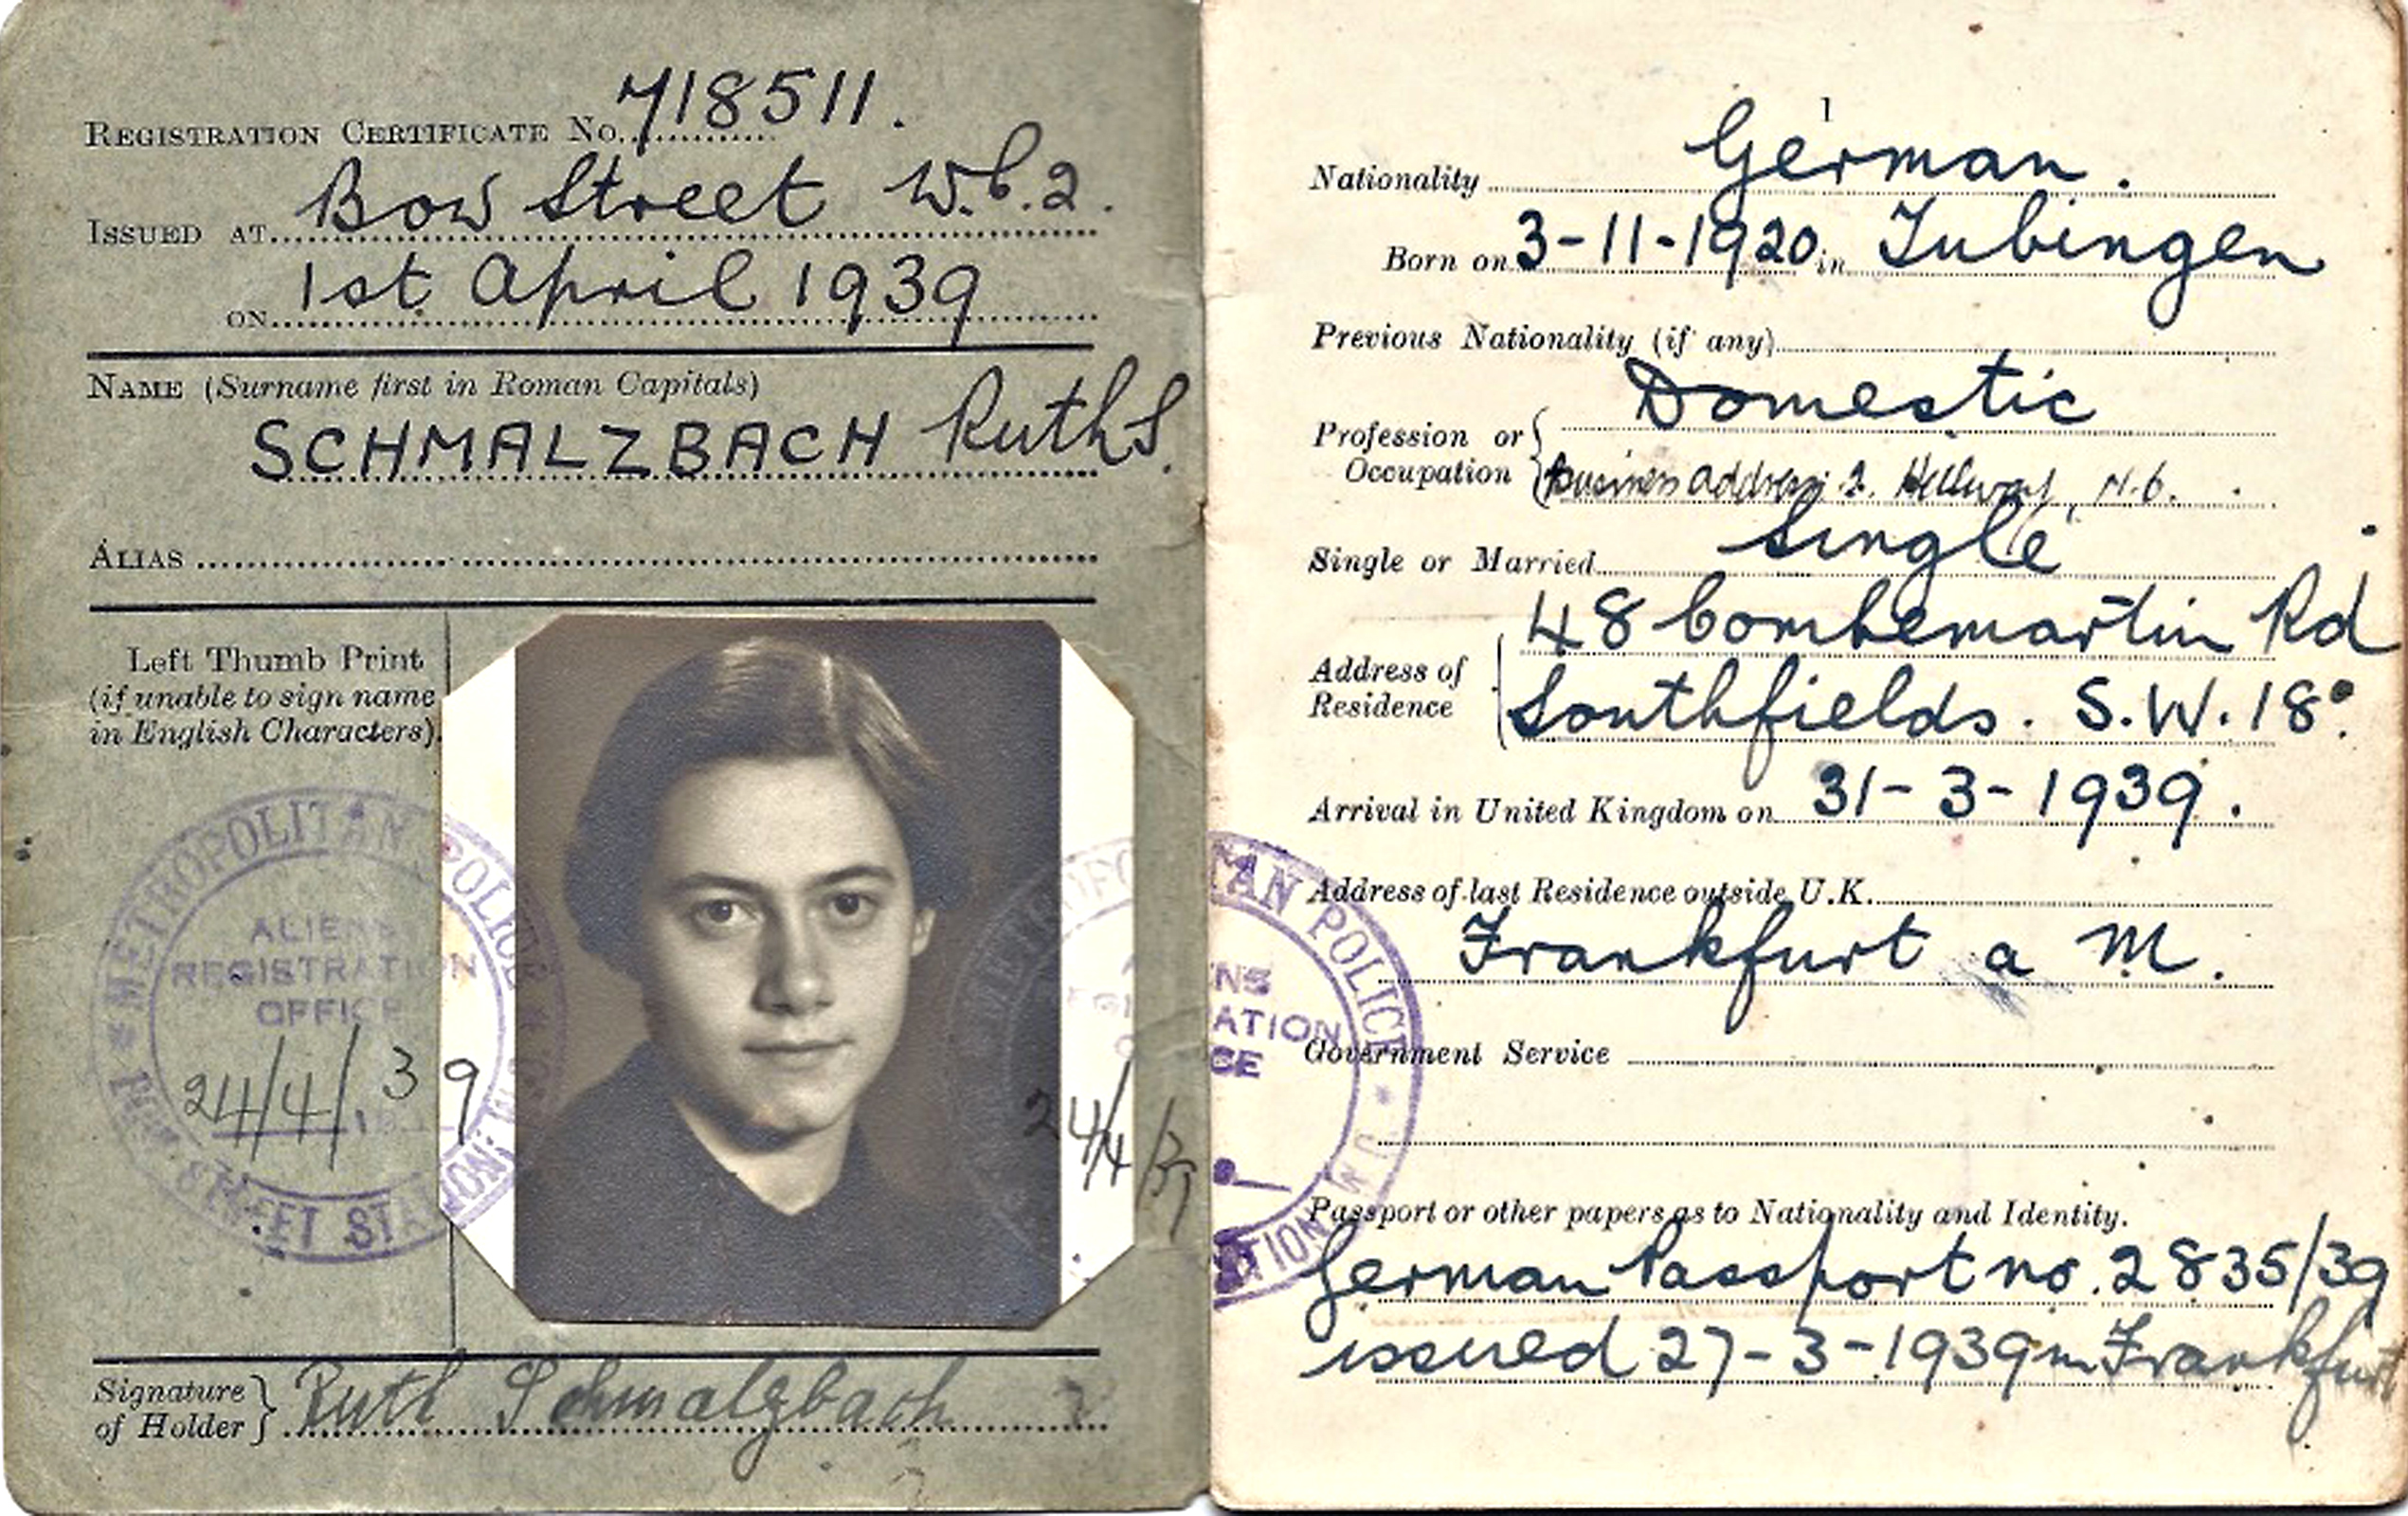 United Kingdom Registration Certificate for Ruth Schmalzbach.